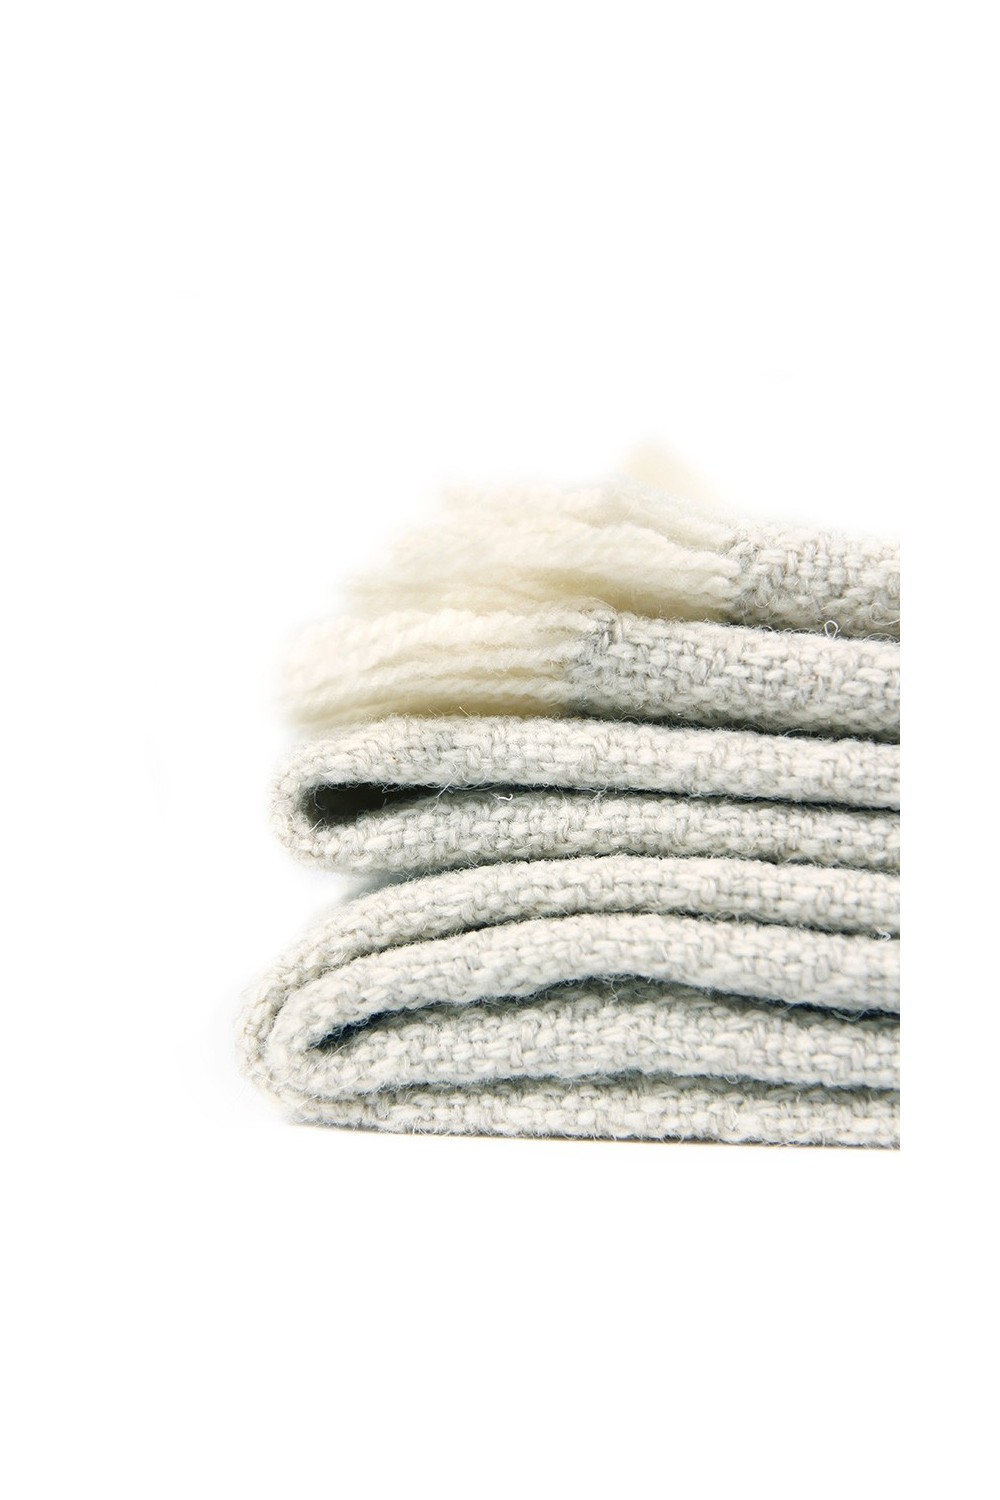 Manta de lana hecha a mano en telar